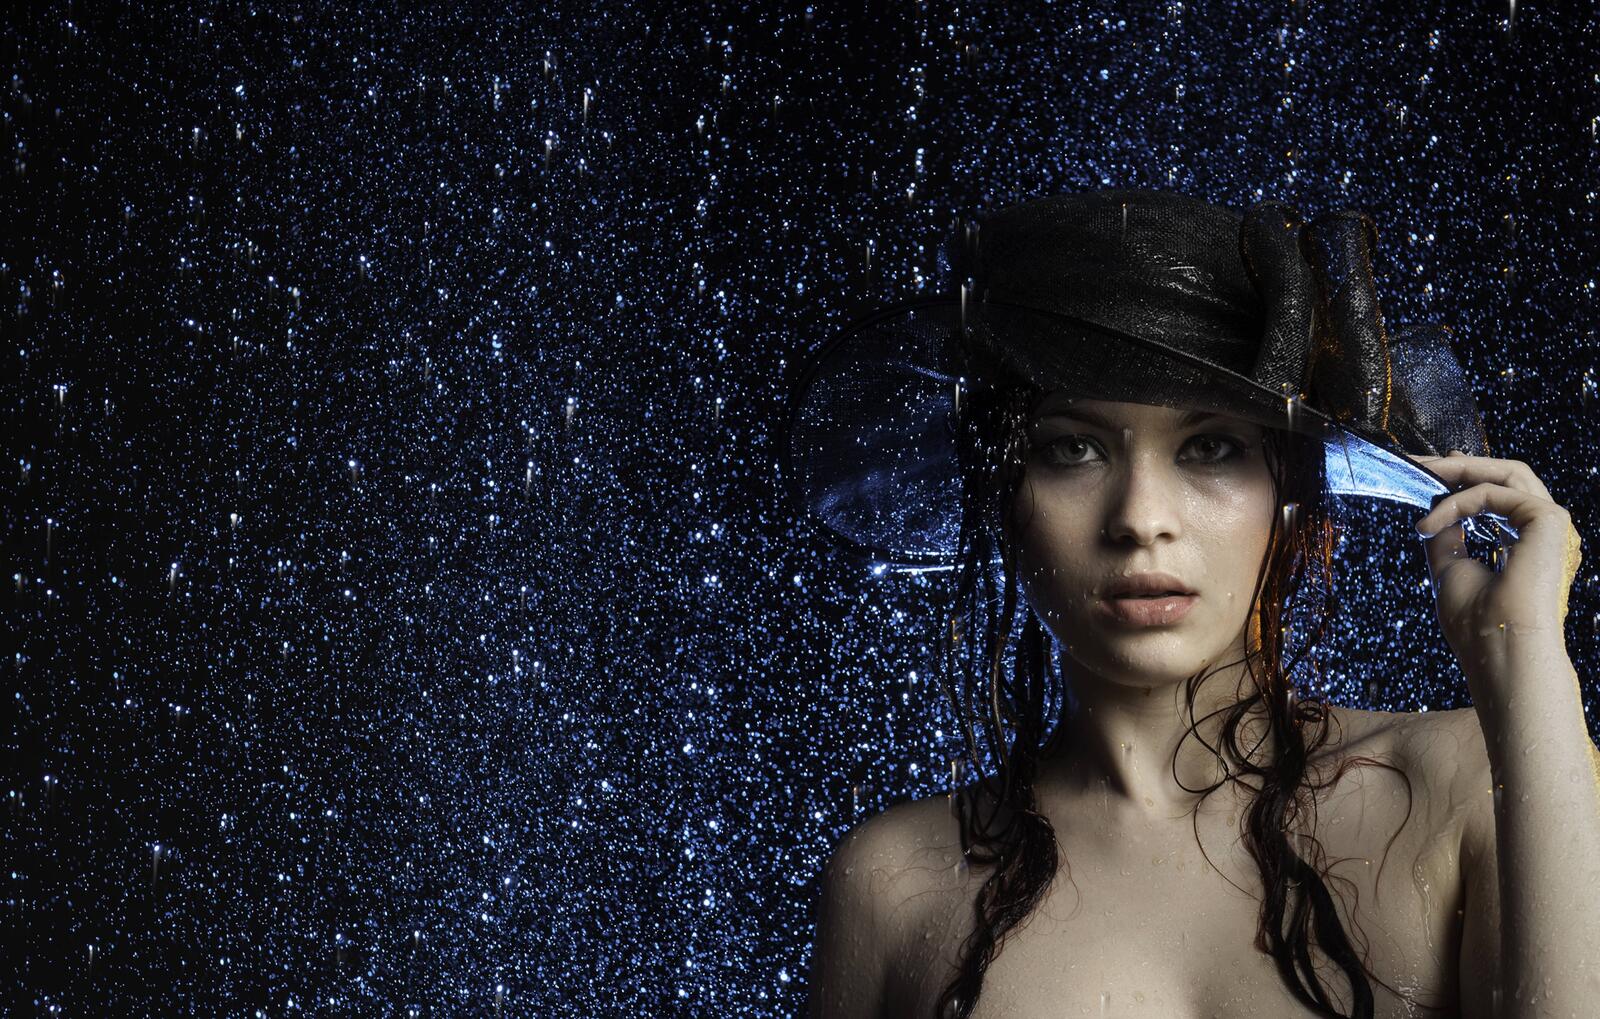 Wallpapers hat model girl in the rain on the desktop